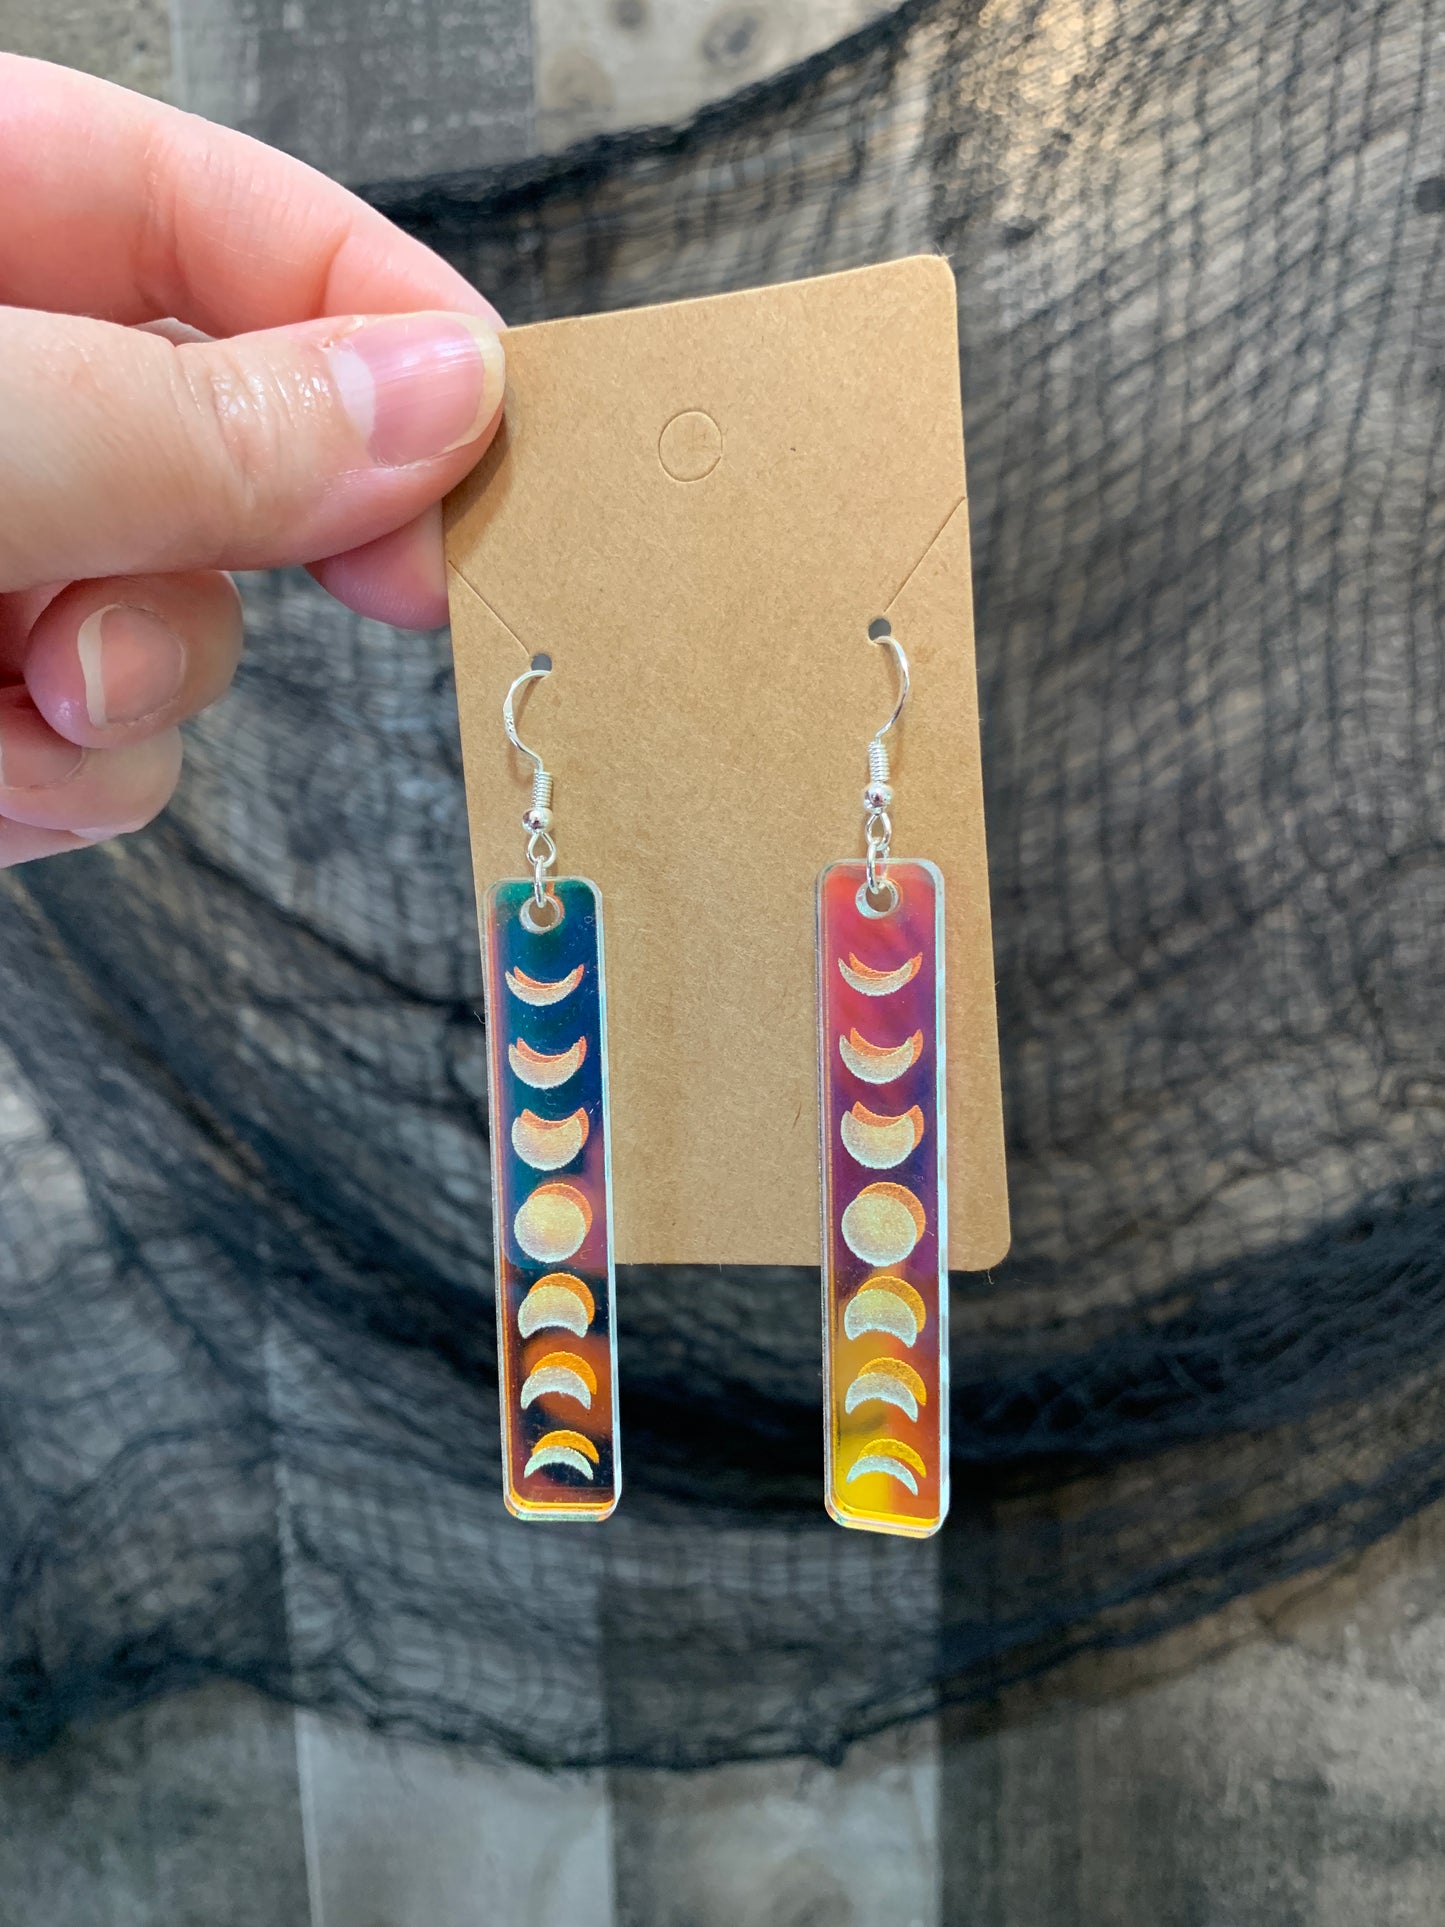 Engraved Moon Phase - Celestial Earrings - Rainbow Iridescent Acrylic Handmade Jewelry